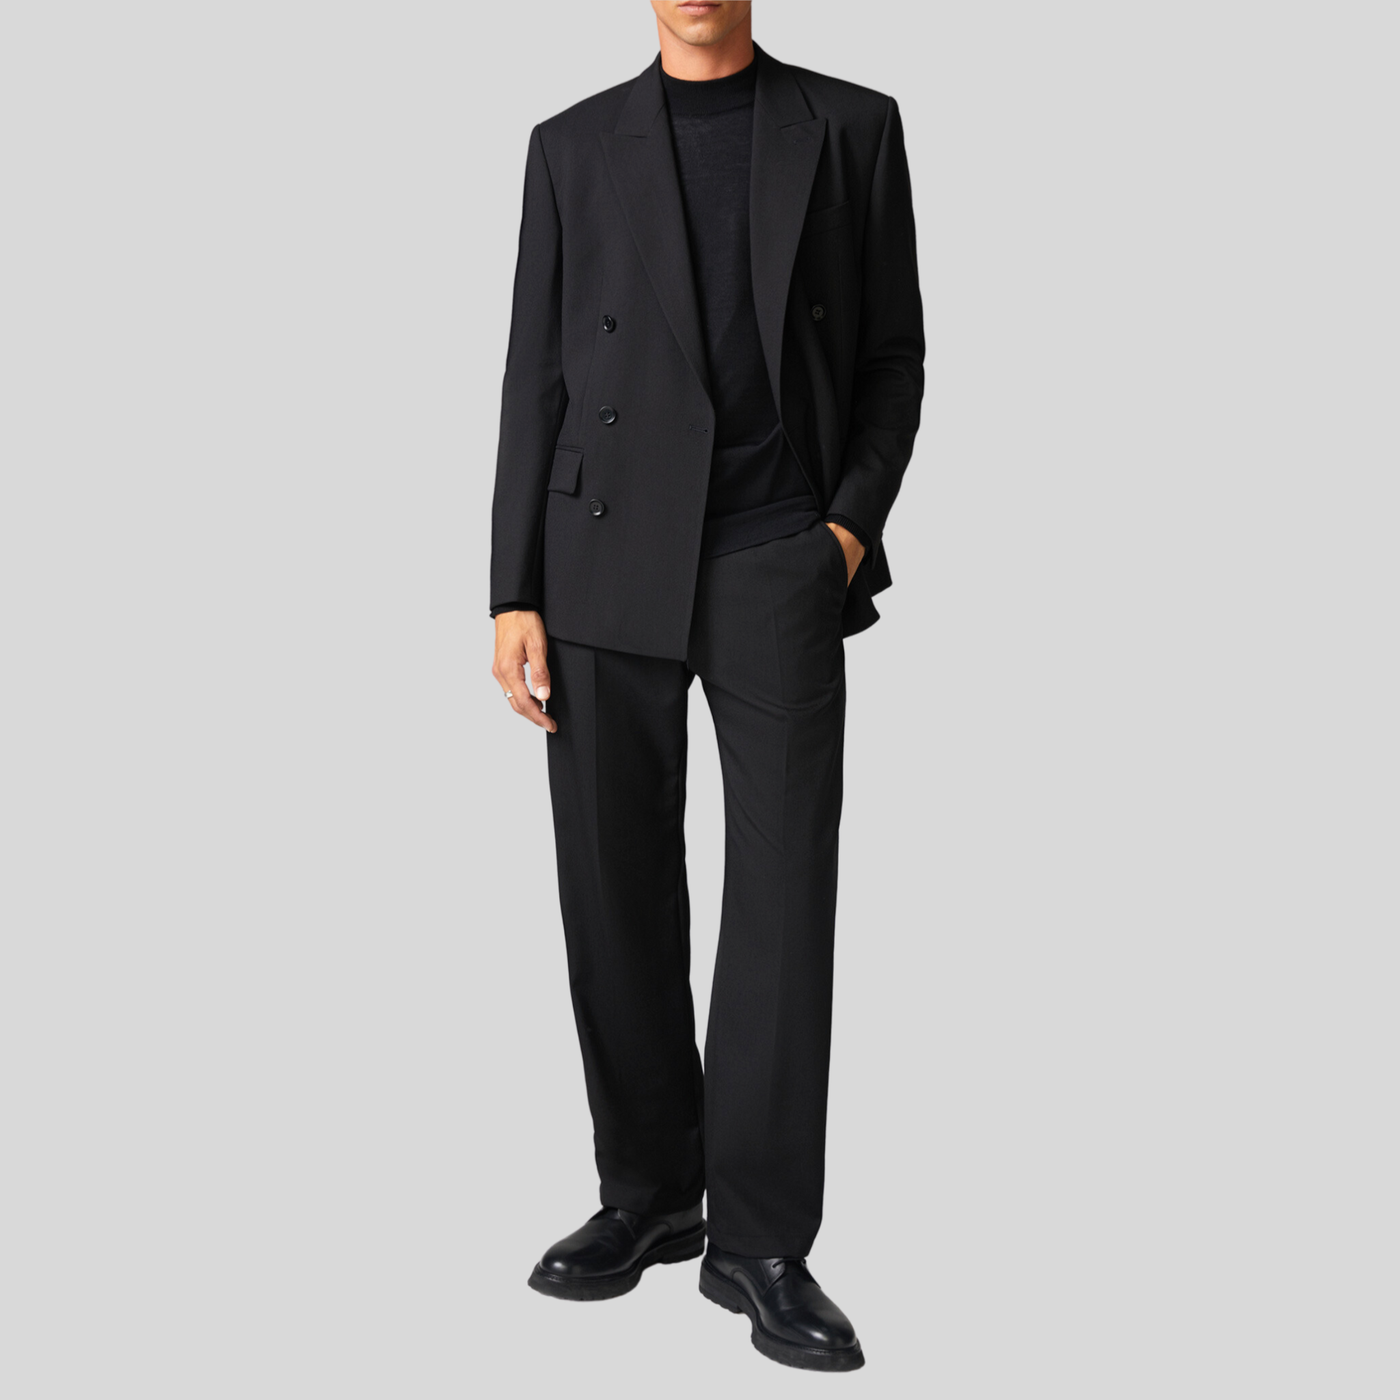 Gotstyle Fashion - Strellson Suits Loose Fit Wide Leg Wool Pants - Black